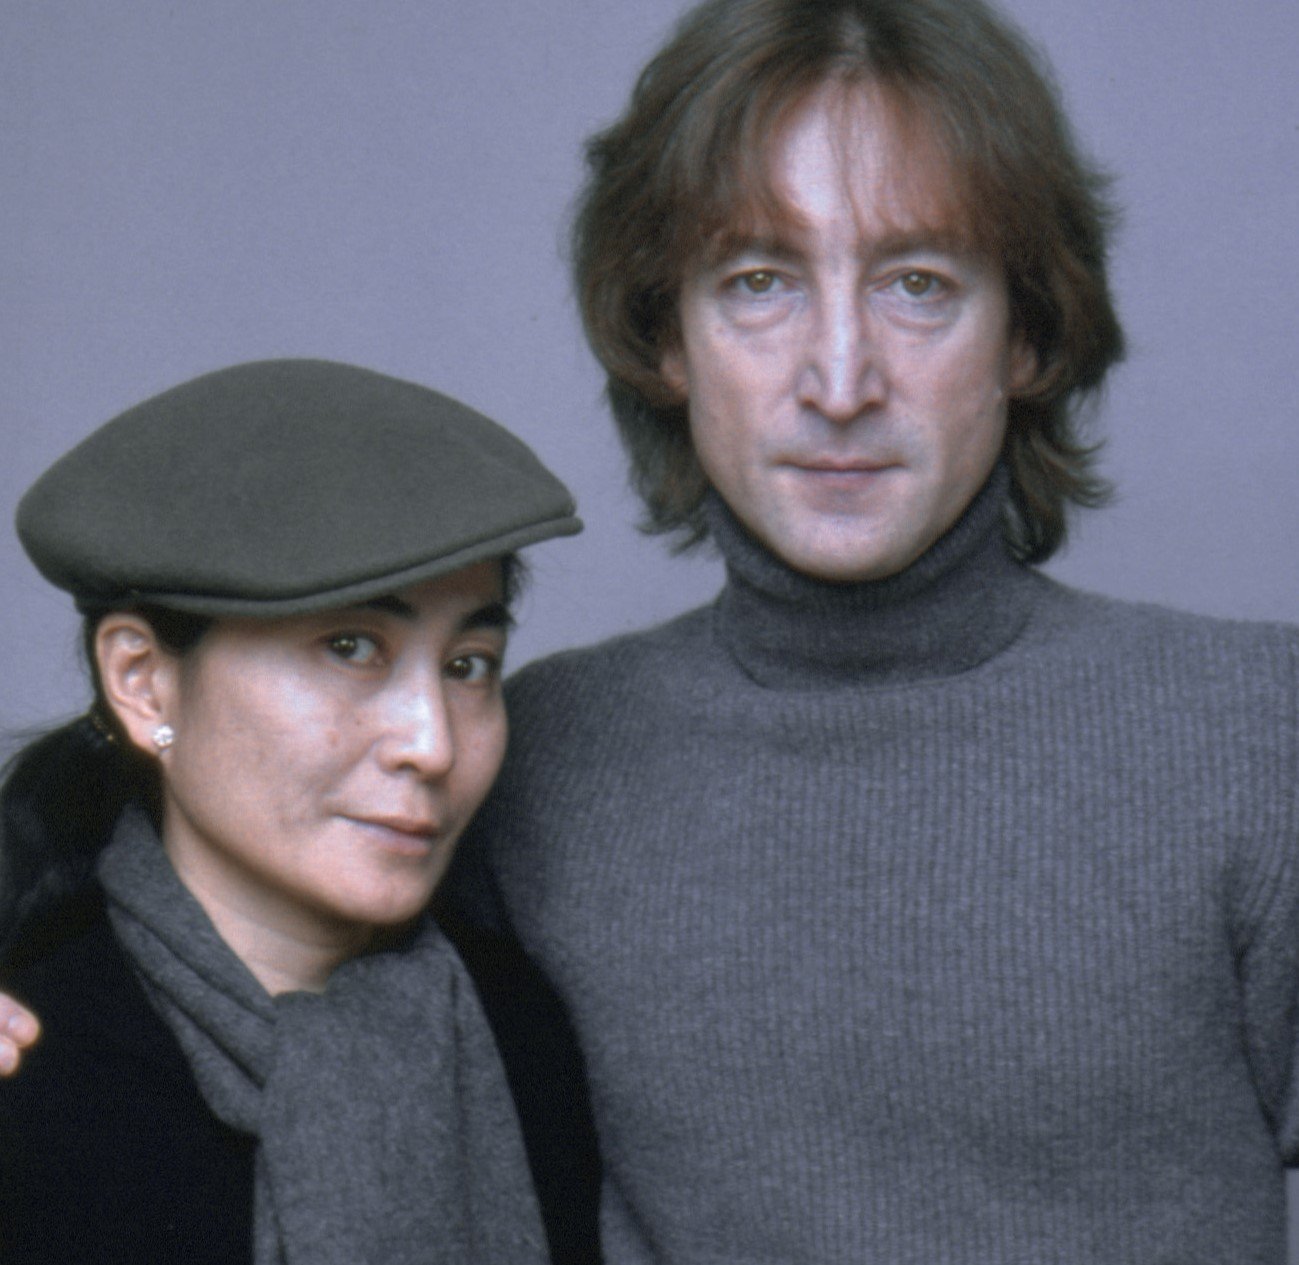 Yoko Ono and John Lennon wearing gray